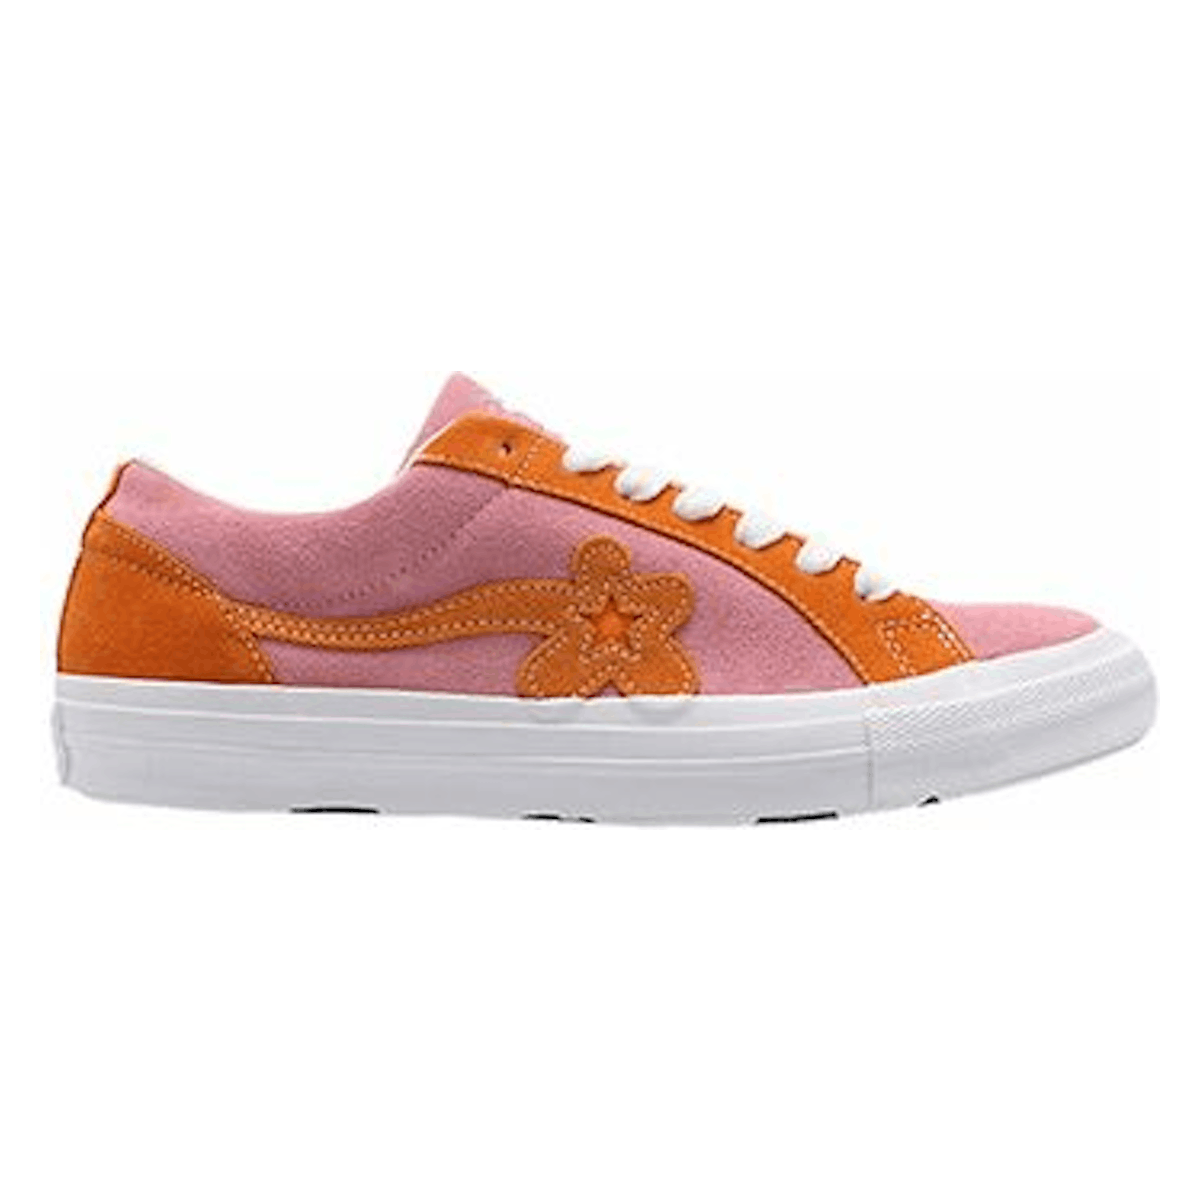 Converse x Golf Le Fleur One Star Pink Orange